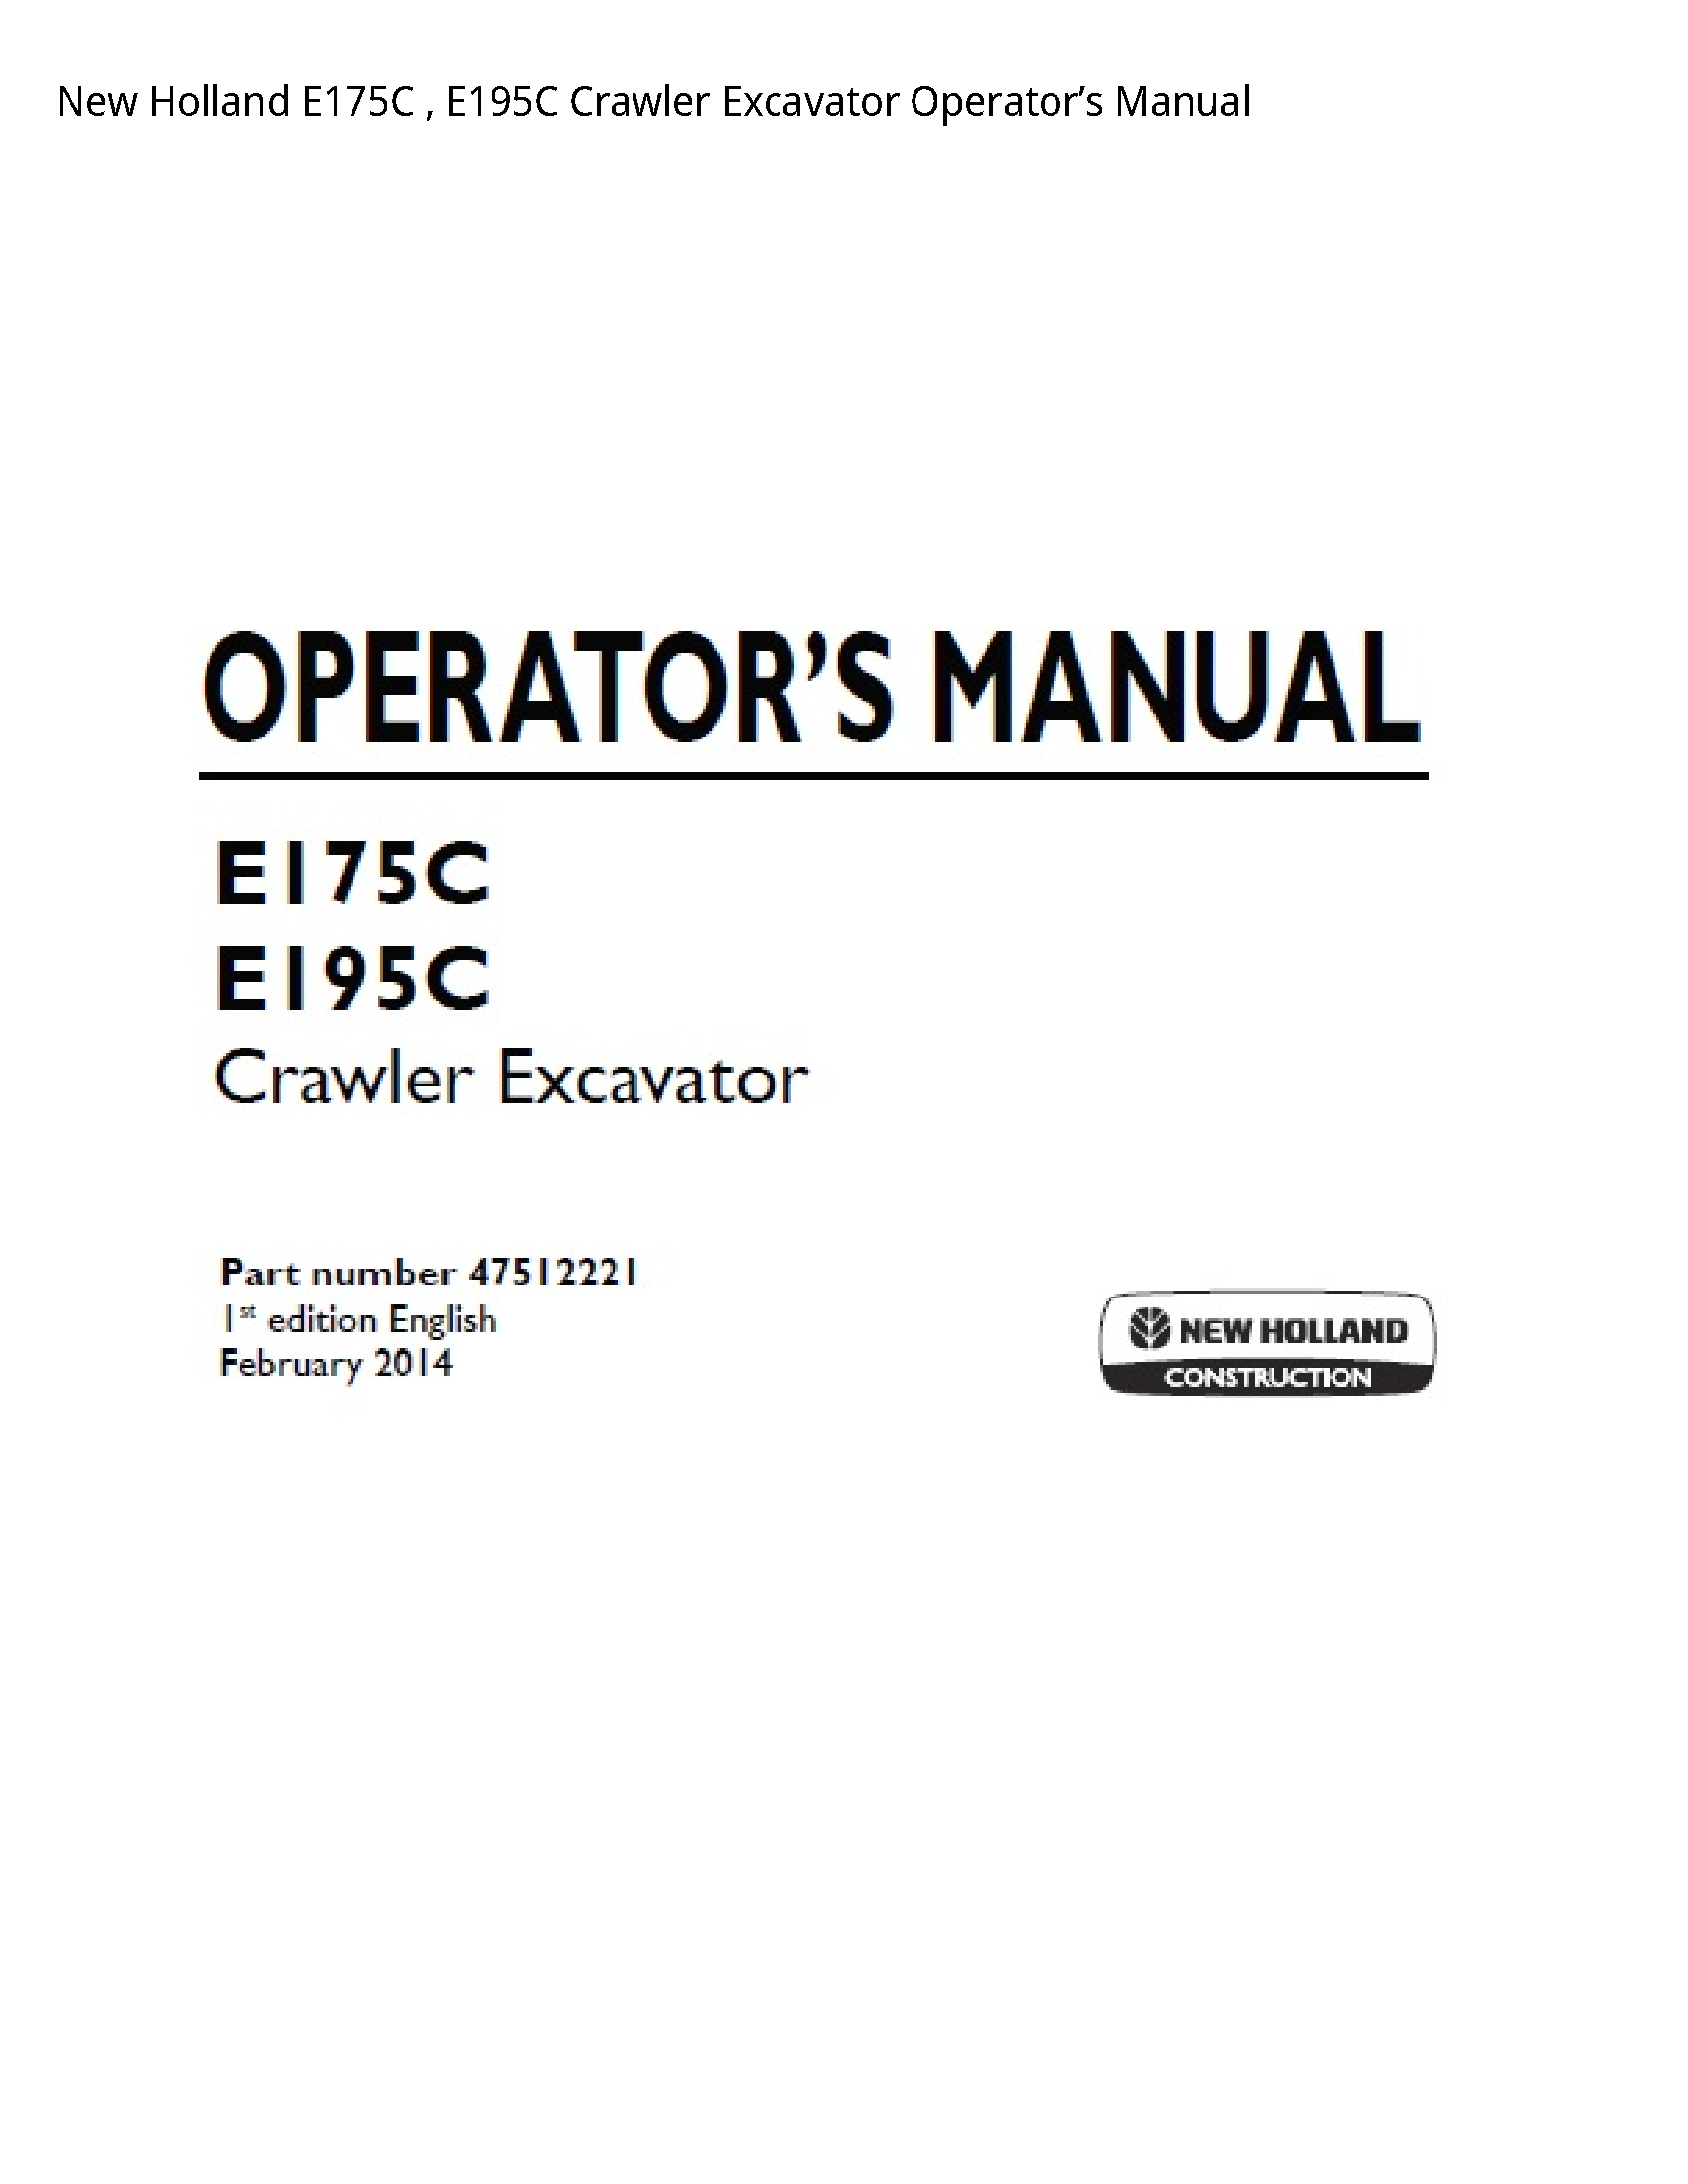 New Holland E175C Crawler Excavator Operator’s manual